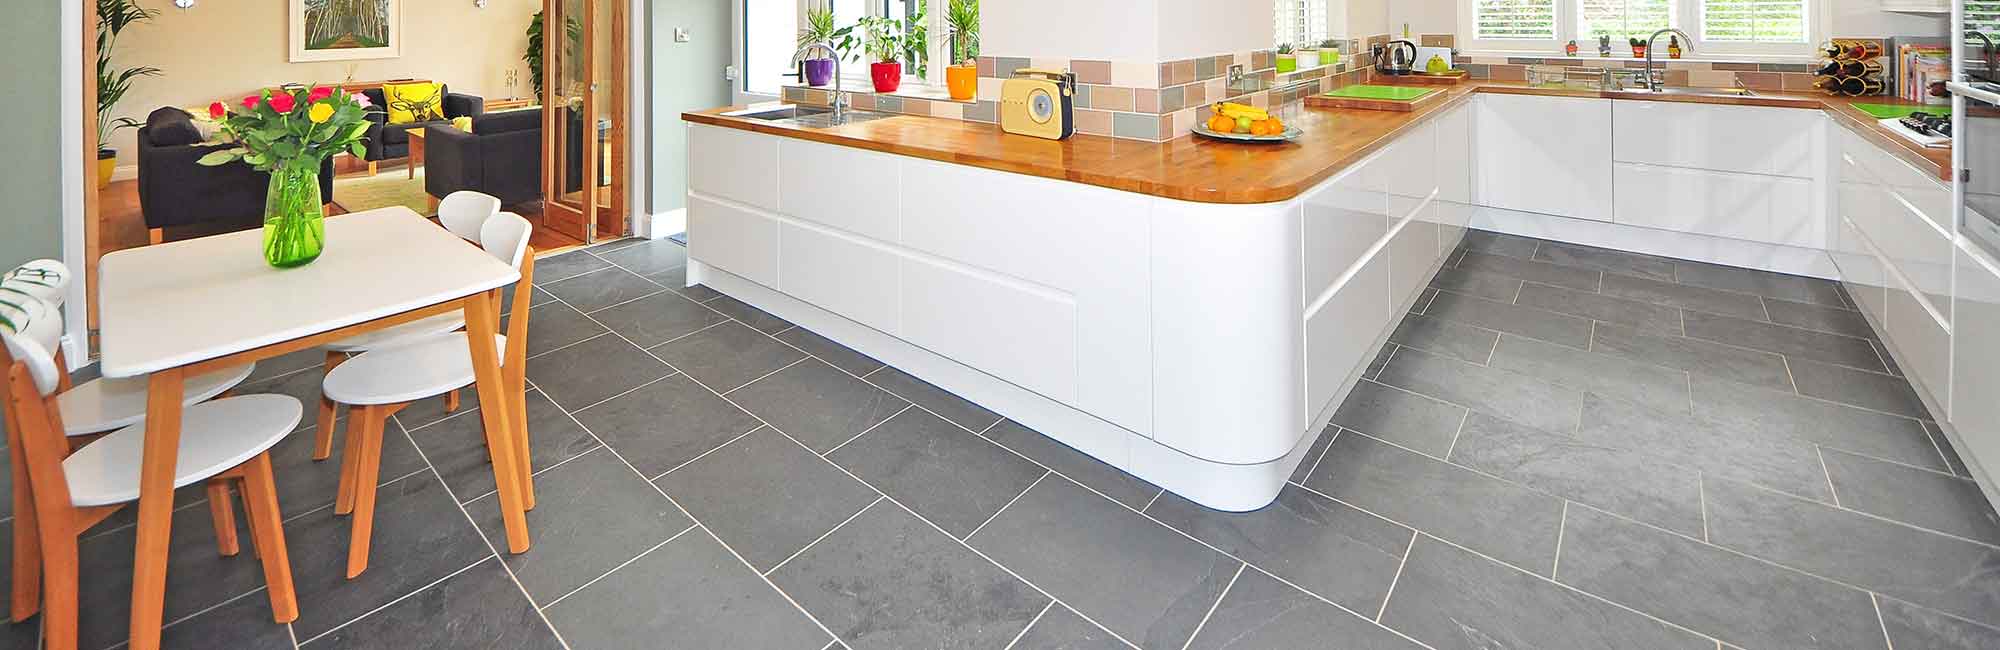 Tiled Kitchen Floor